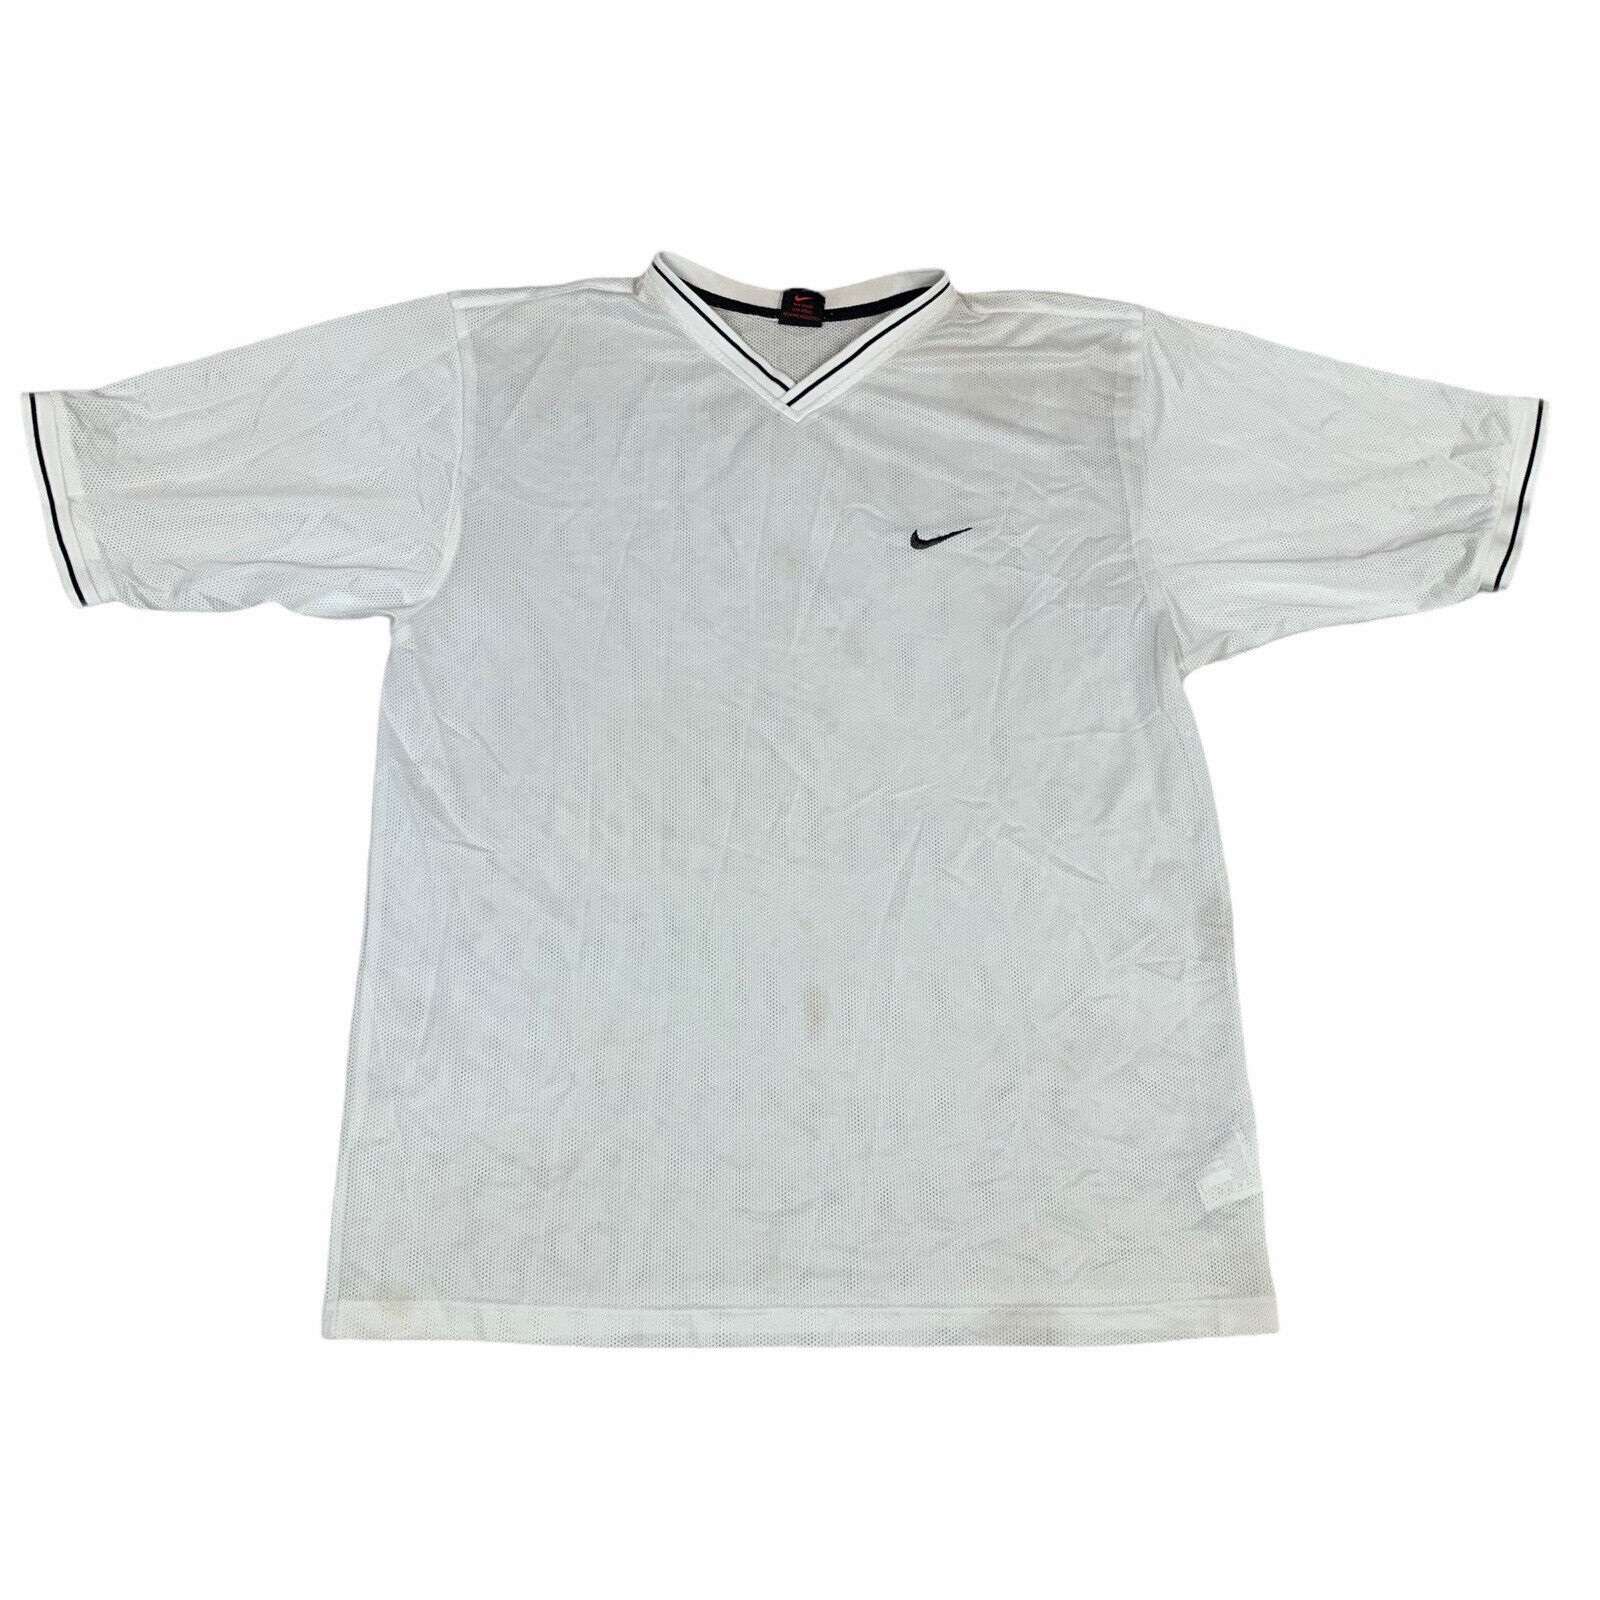 Vintage Nike Shirt Mens Large White Black Tag Swoosh Mesh 